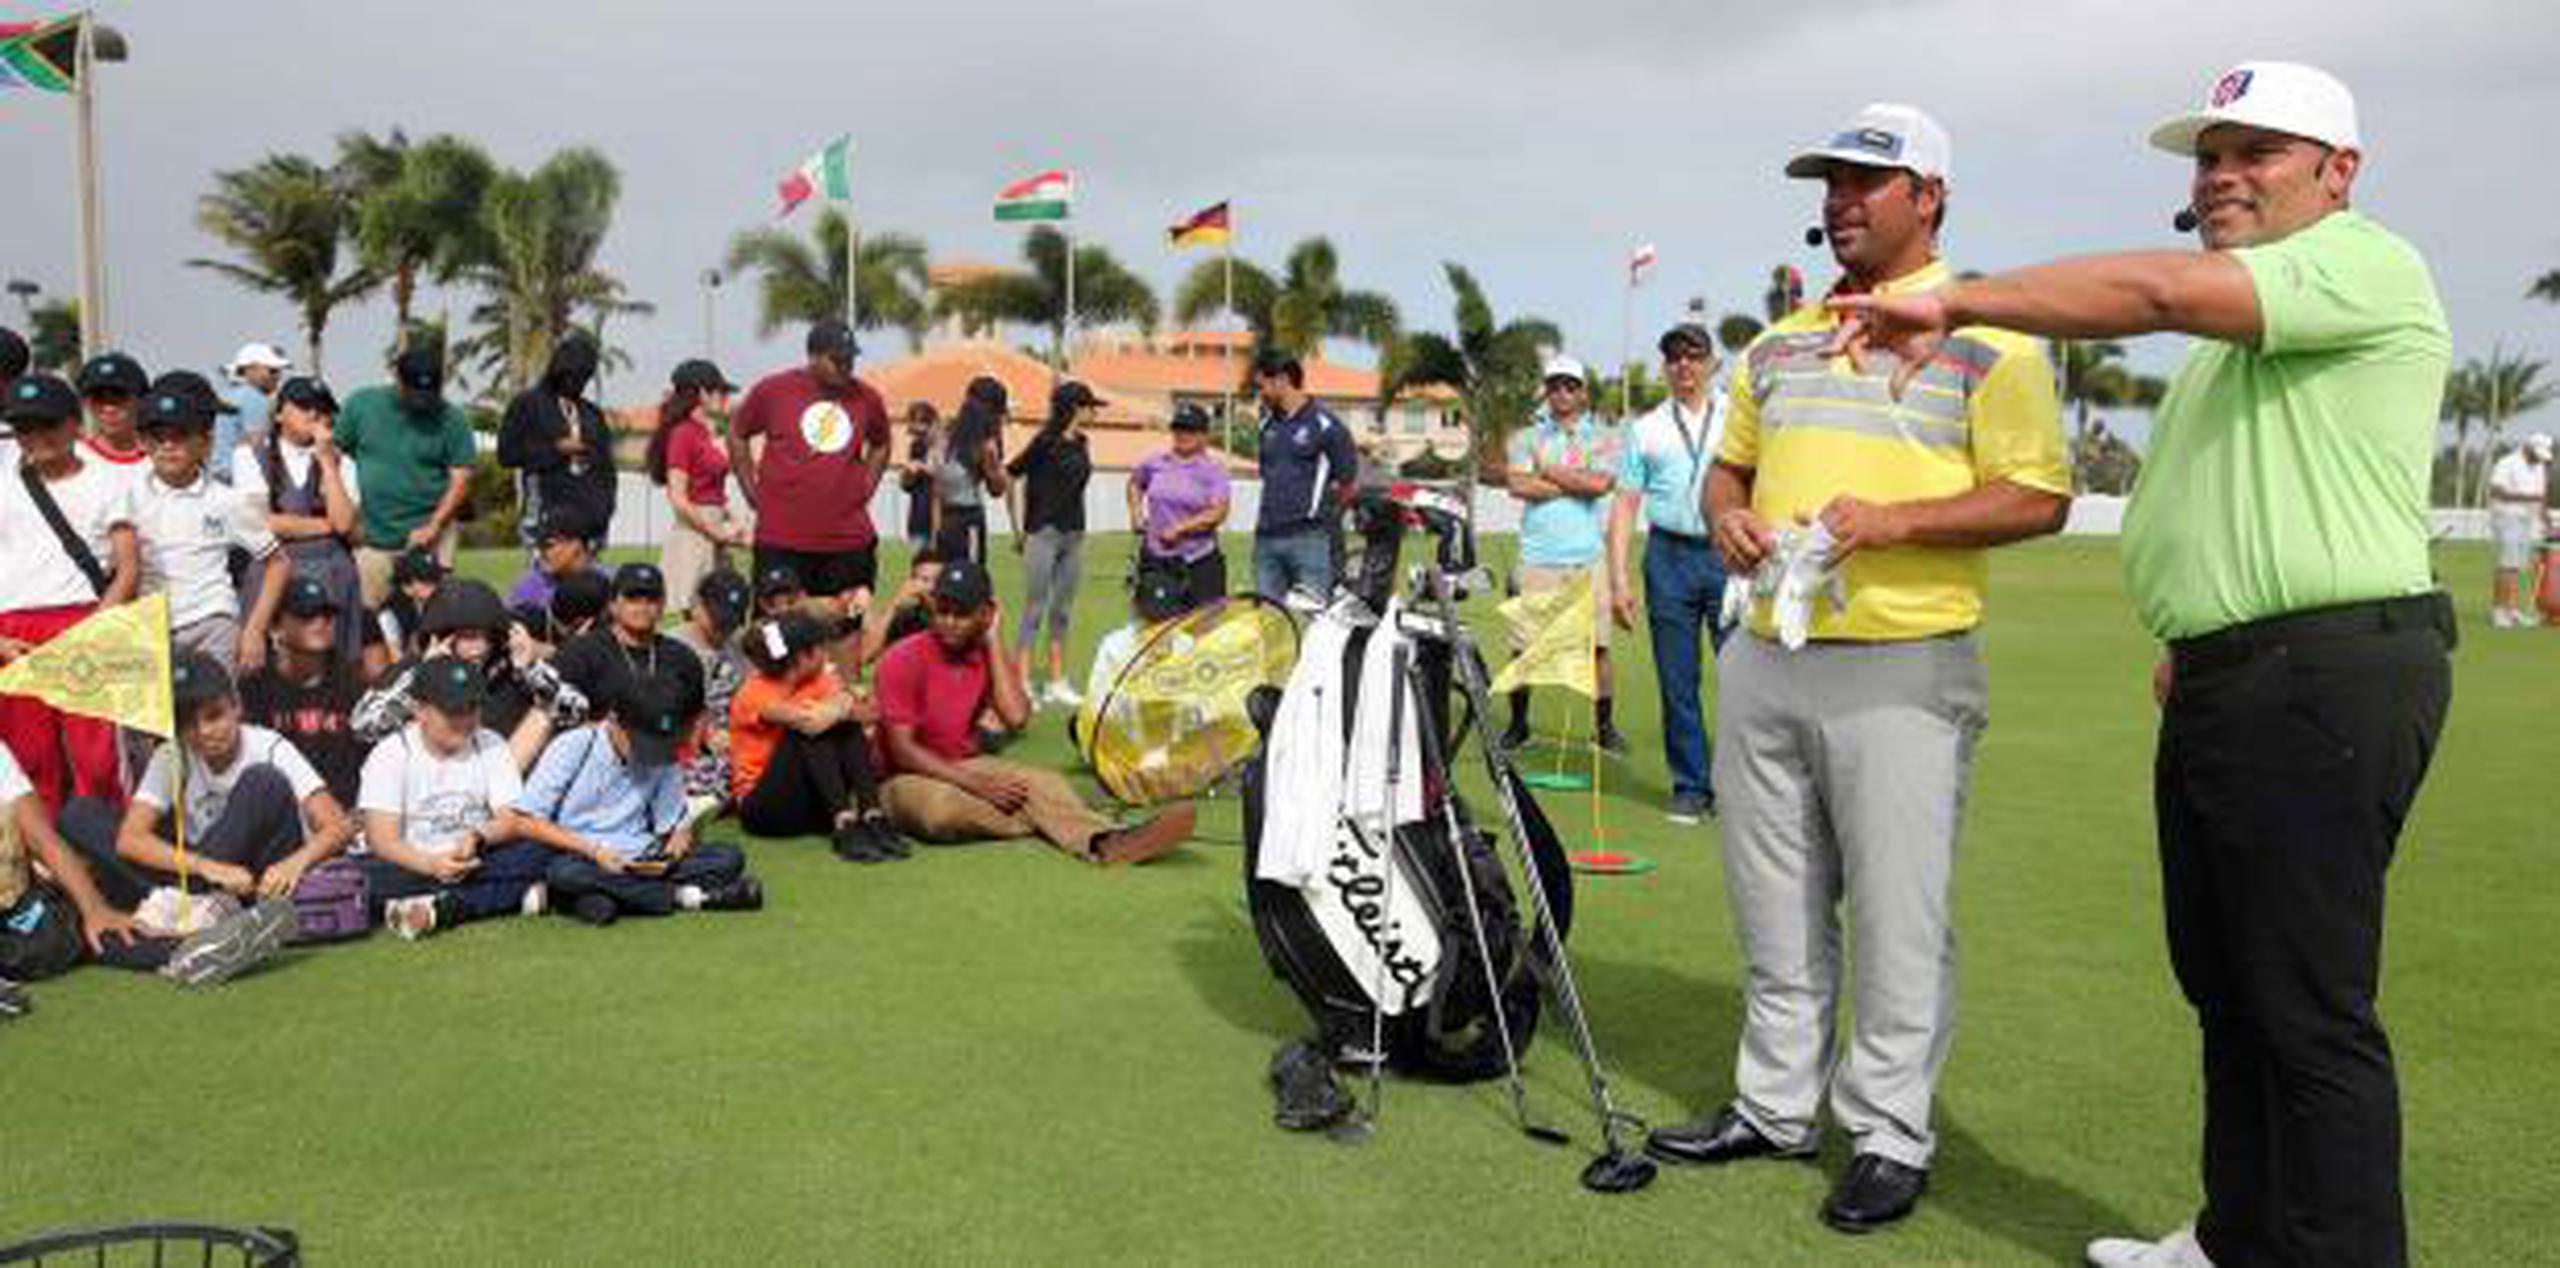 Rafa Campos e Iván Rodríguez ofrecen clínicas de golf a un grupo de estudiantes del sistema público del País, previo al inicio del P.R. Open. (Juan Luis Martínez Pérez / juan.martinez@gfrmedia.com)